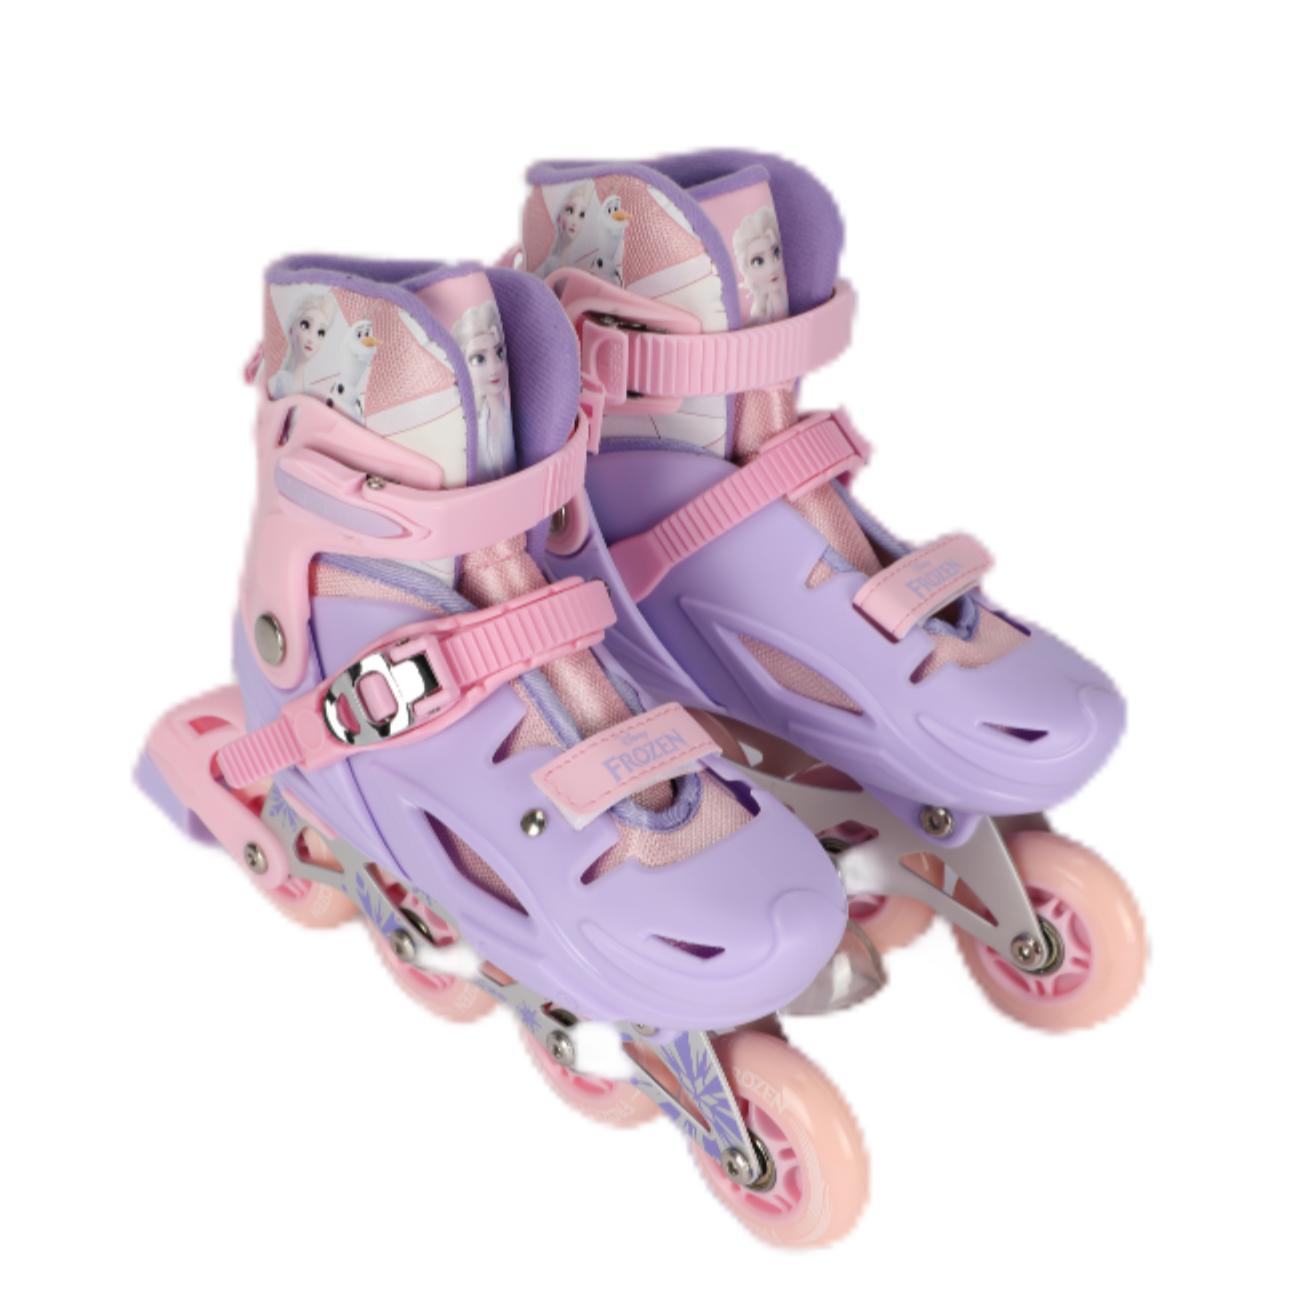 Disney Frozen Kids Roller Skate Combo Set Pinkish-purple